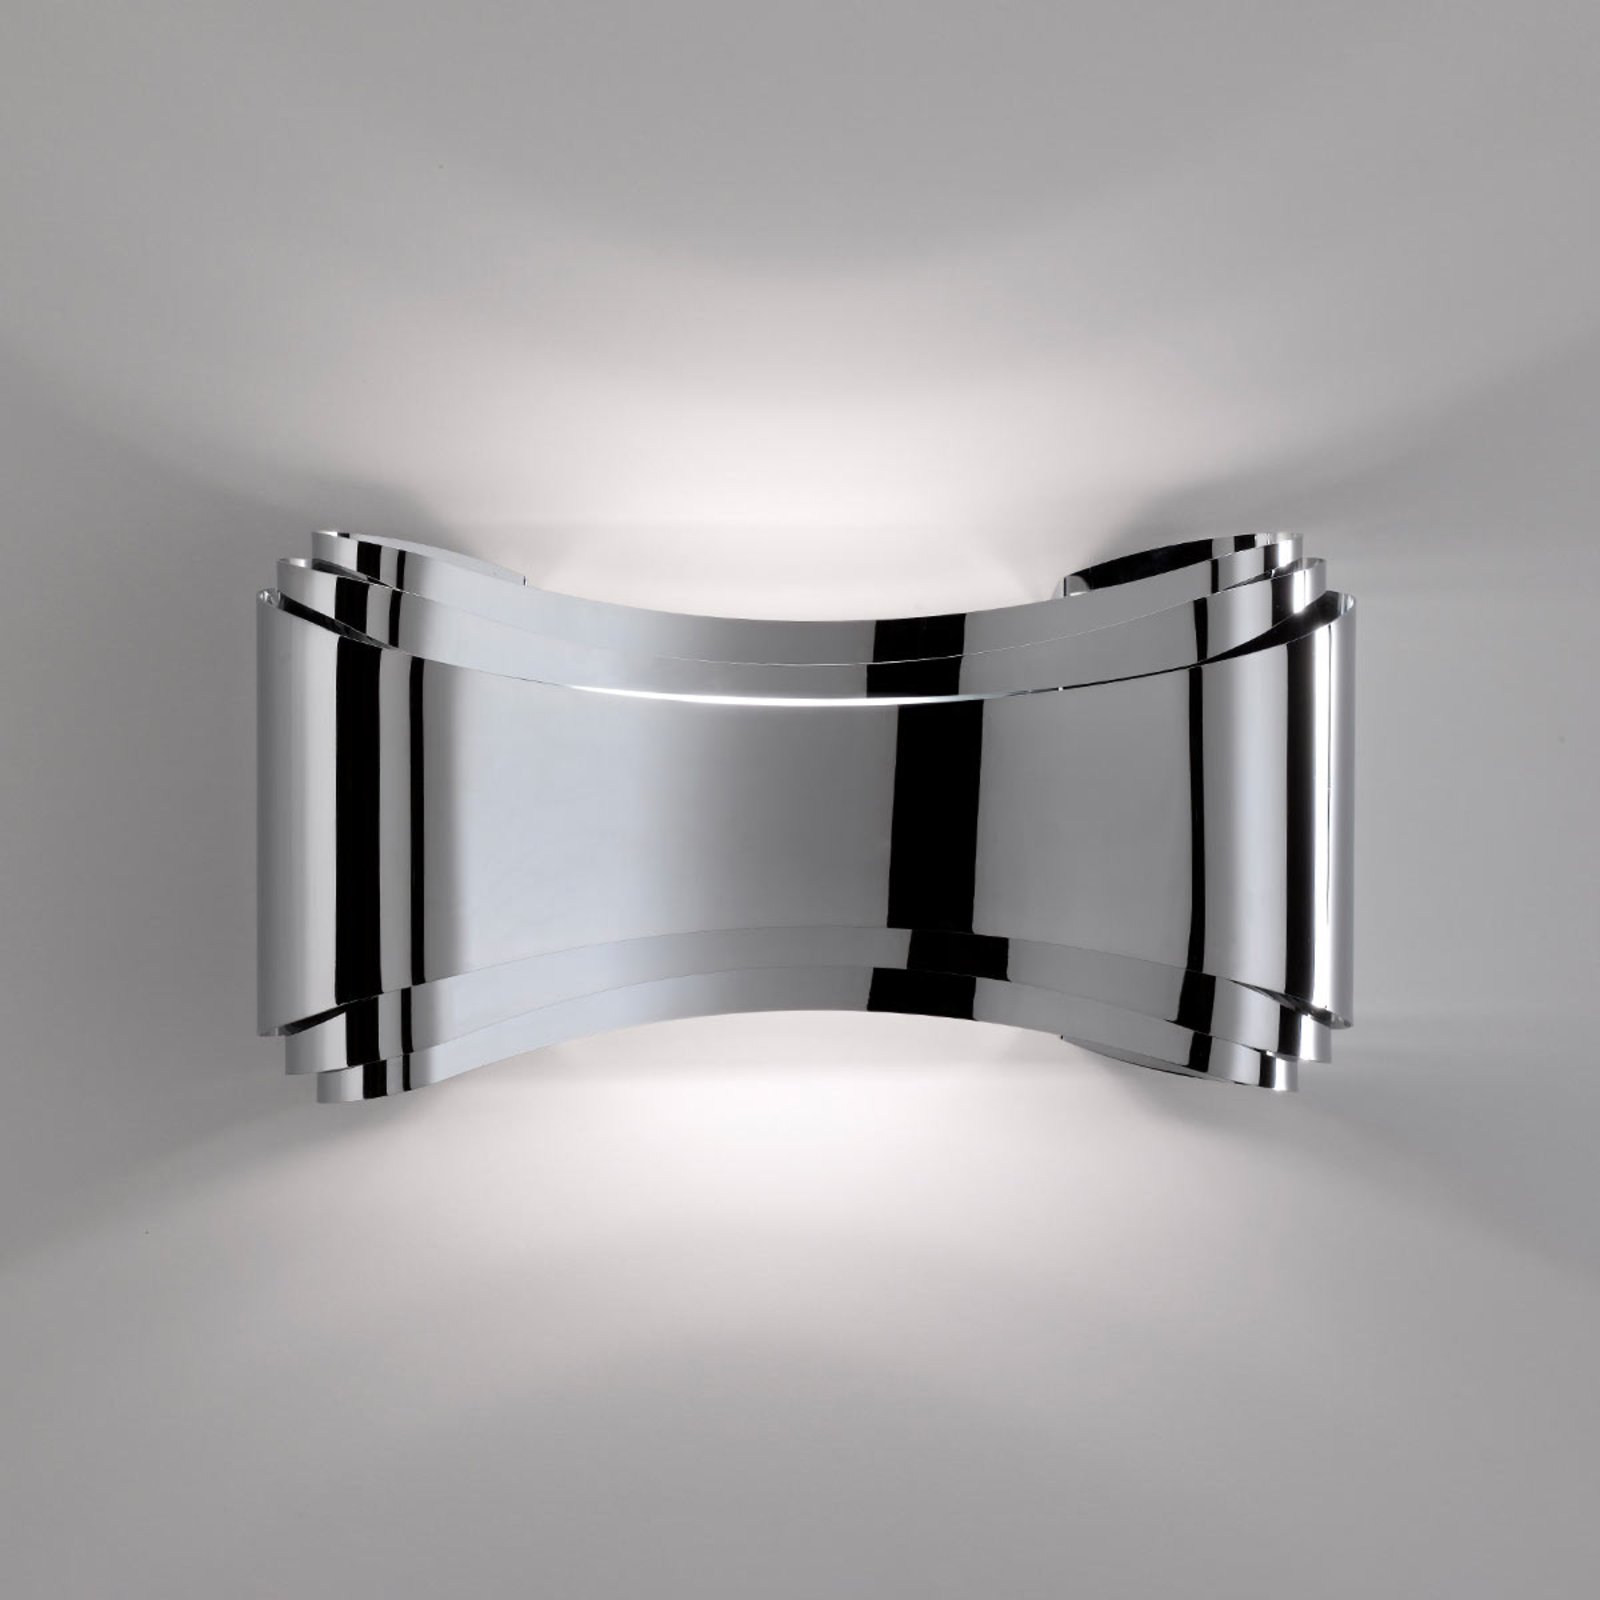 Ionica LED wall light made of steel, chrome